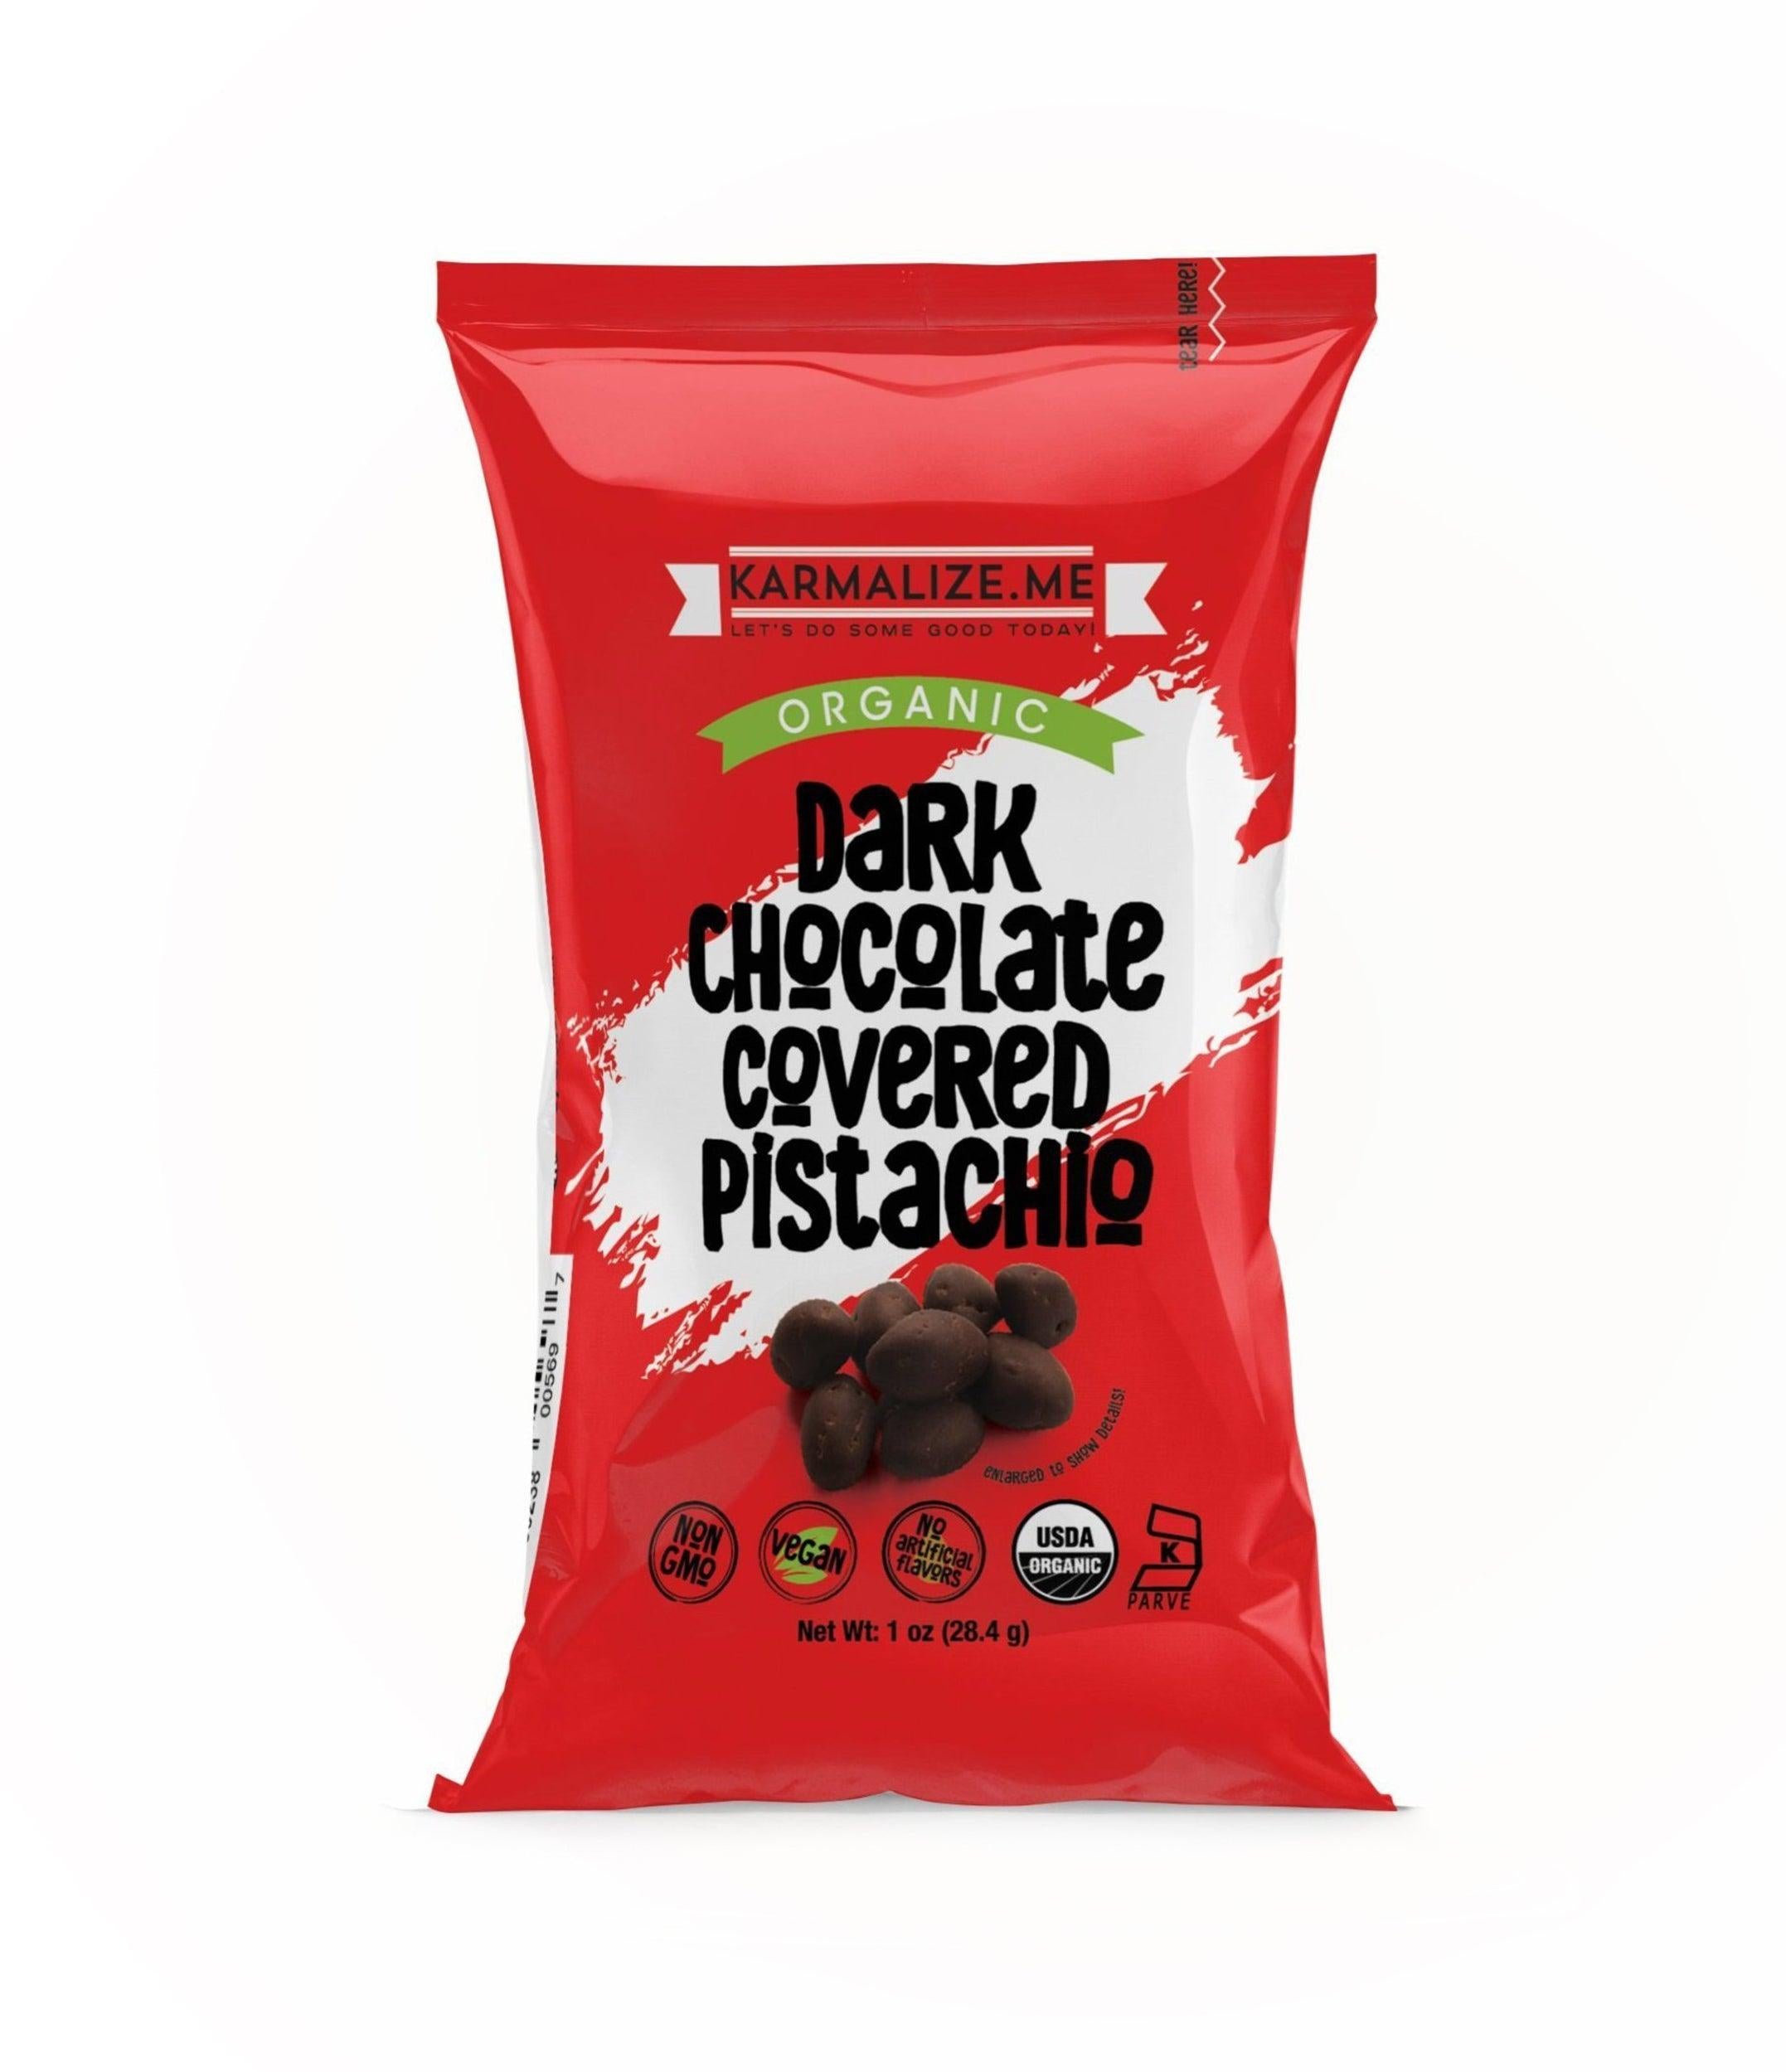 1 oz. Organic Vegan Dark Chocolate Covered Pistachio - Pack of 6.